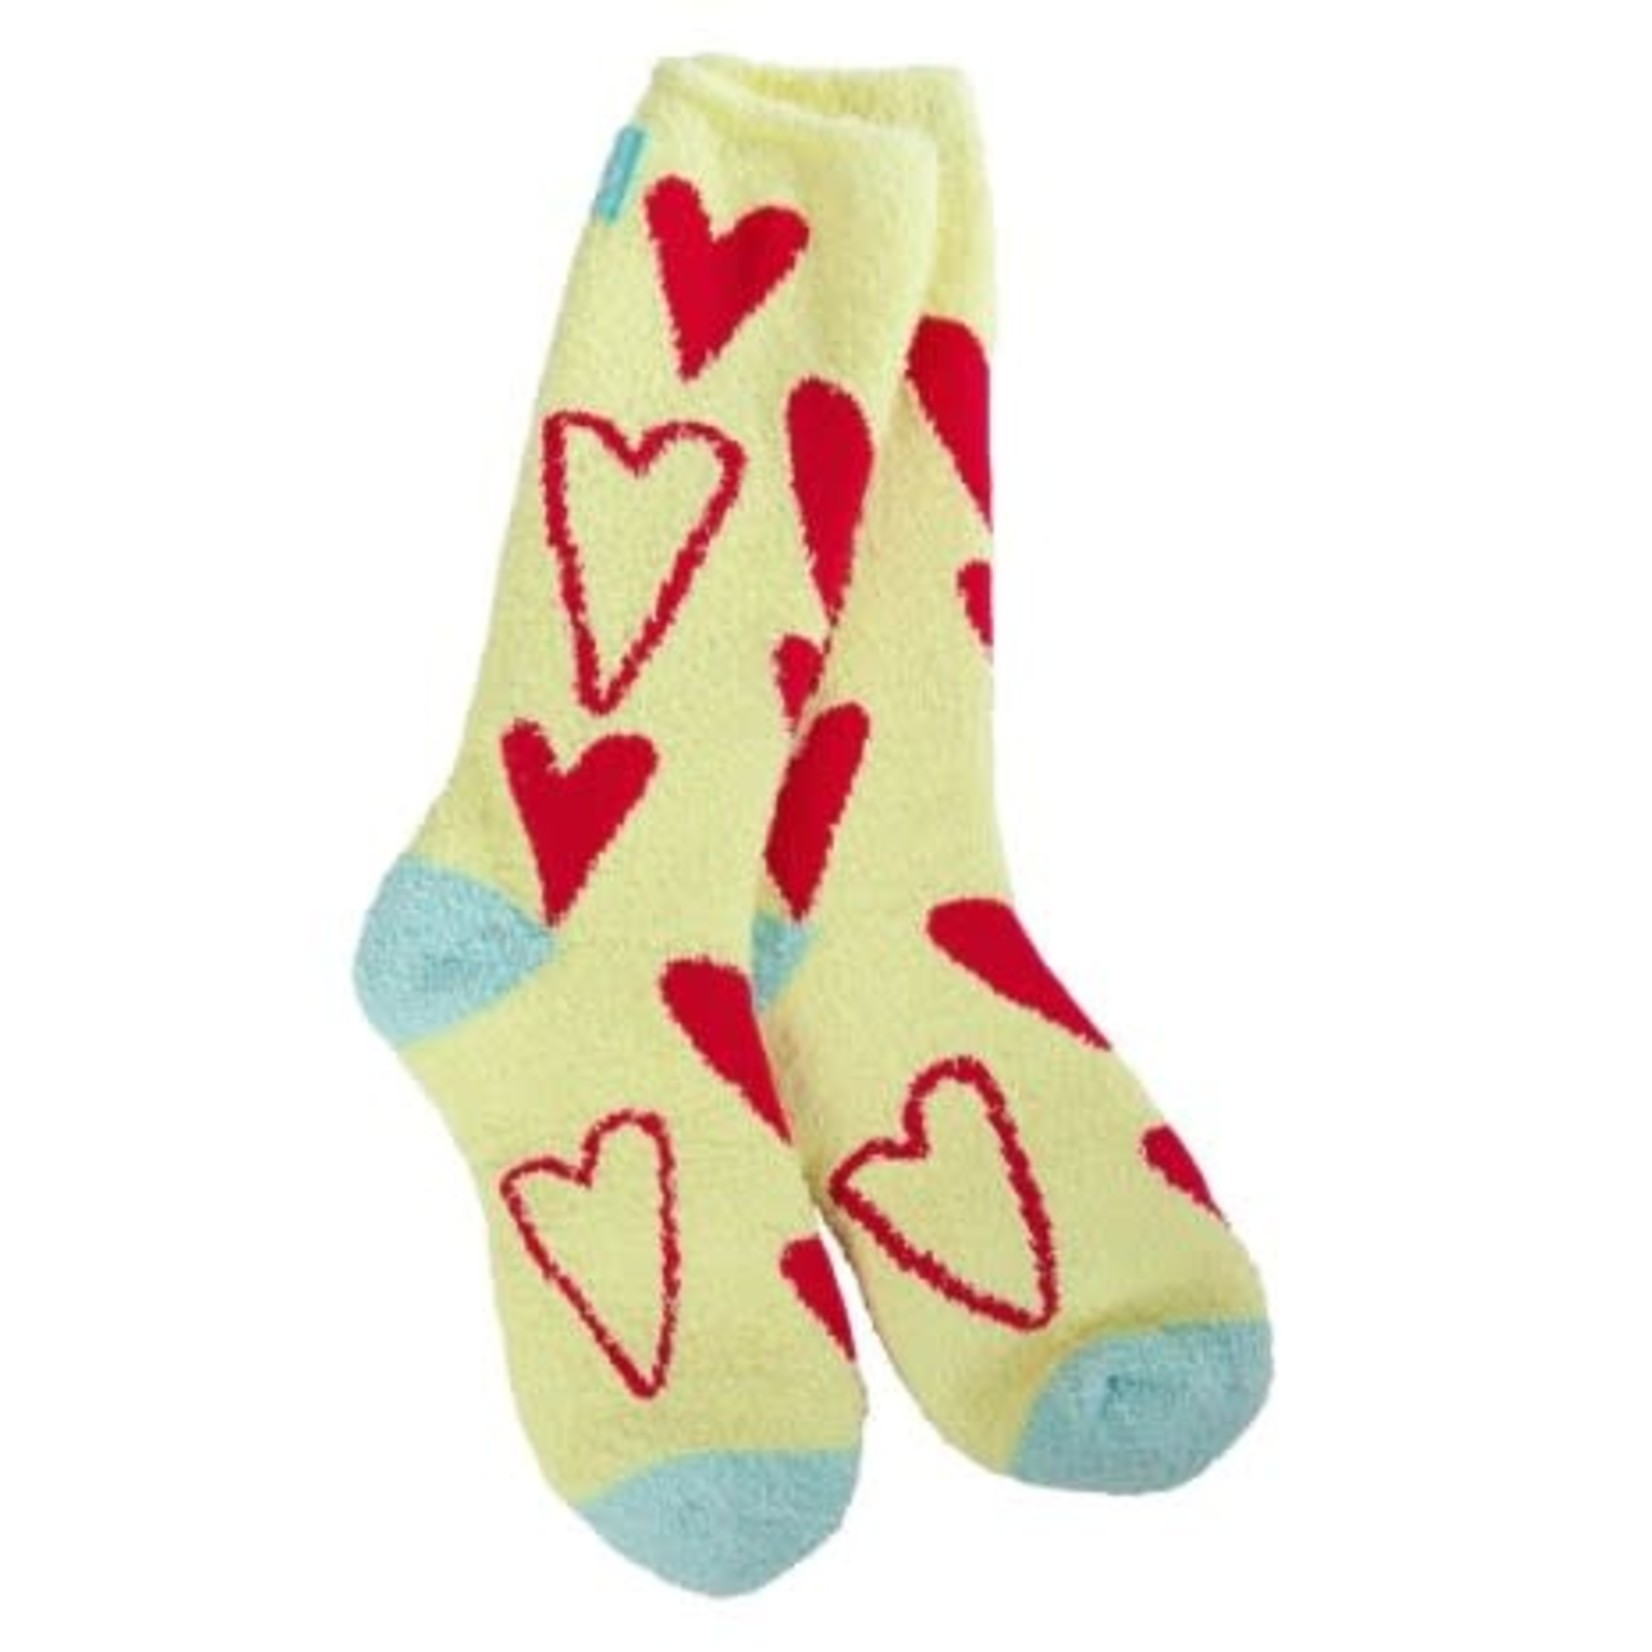 World's Softest World's Softest Socks Cozy Crew Red Hearts